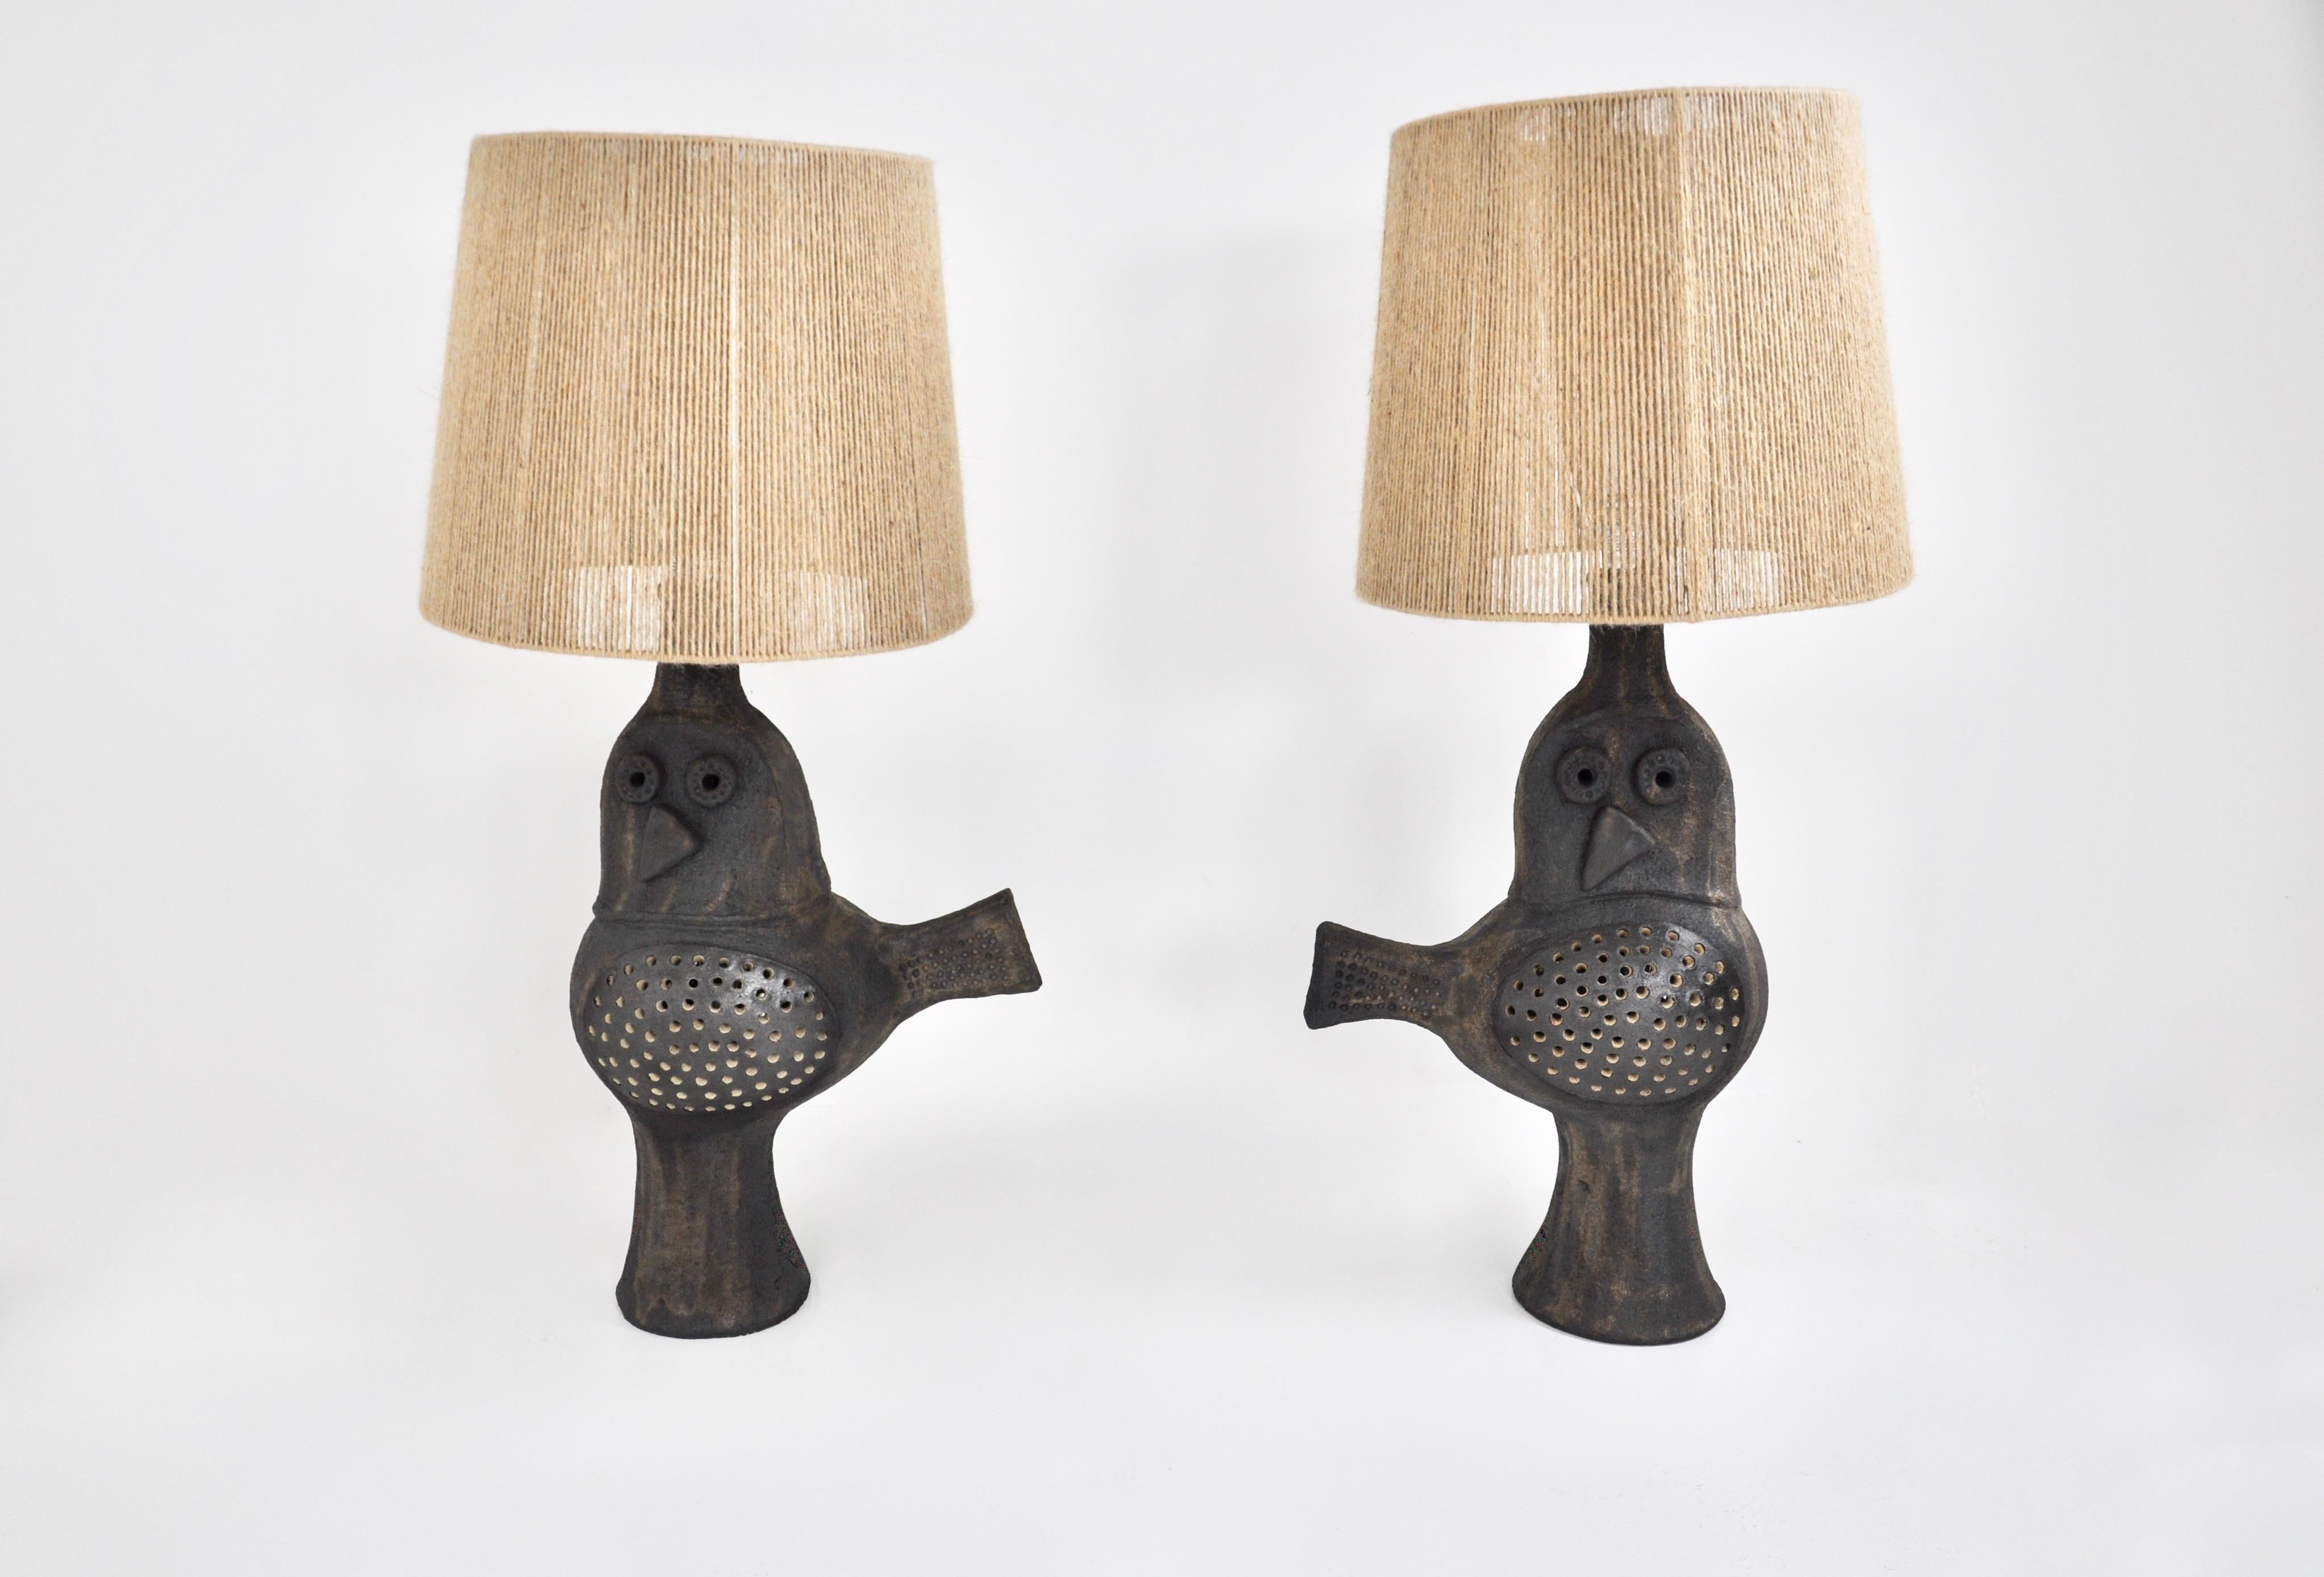 Pair of ceramic lamps by Dominique Pouchain. Stamped Dominique Pouchain (see picture).